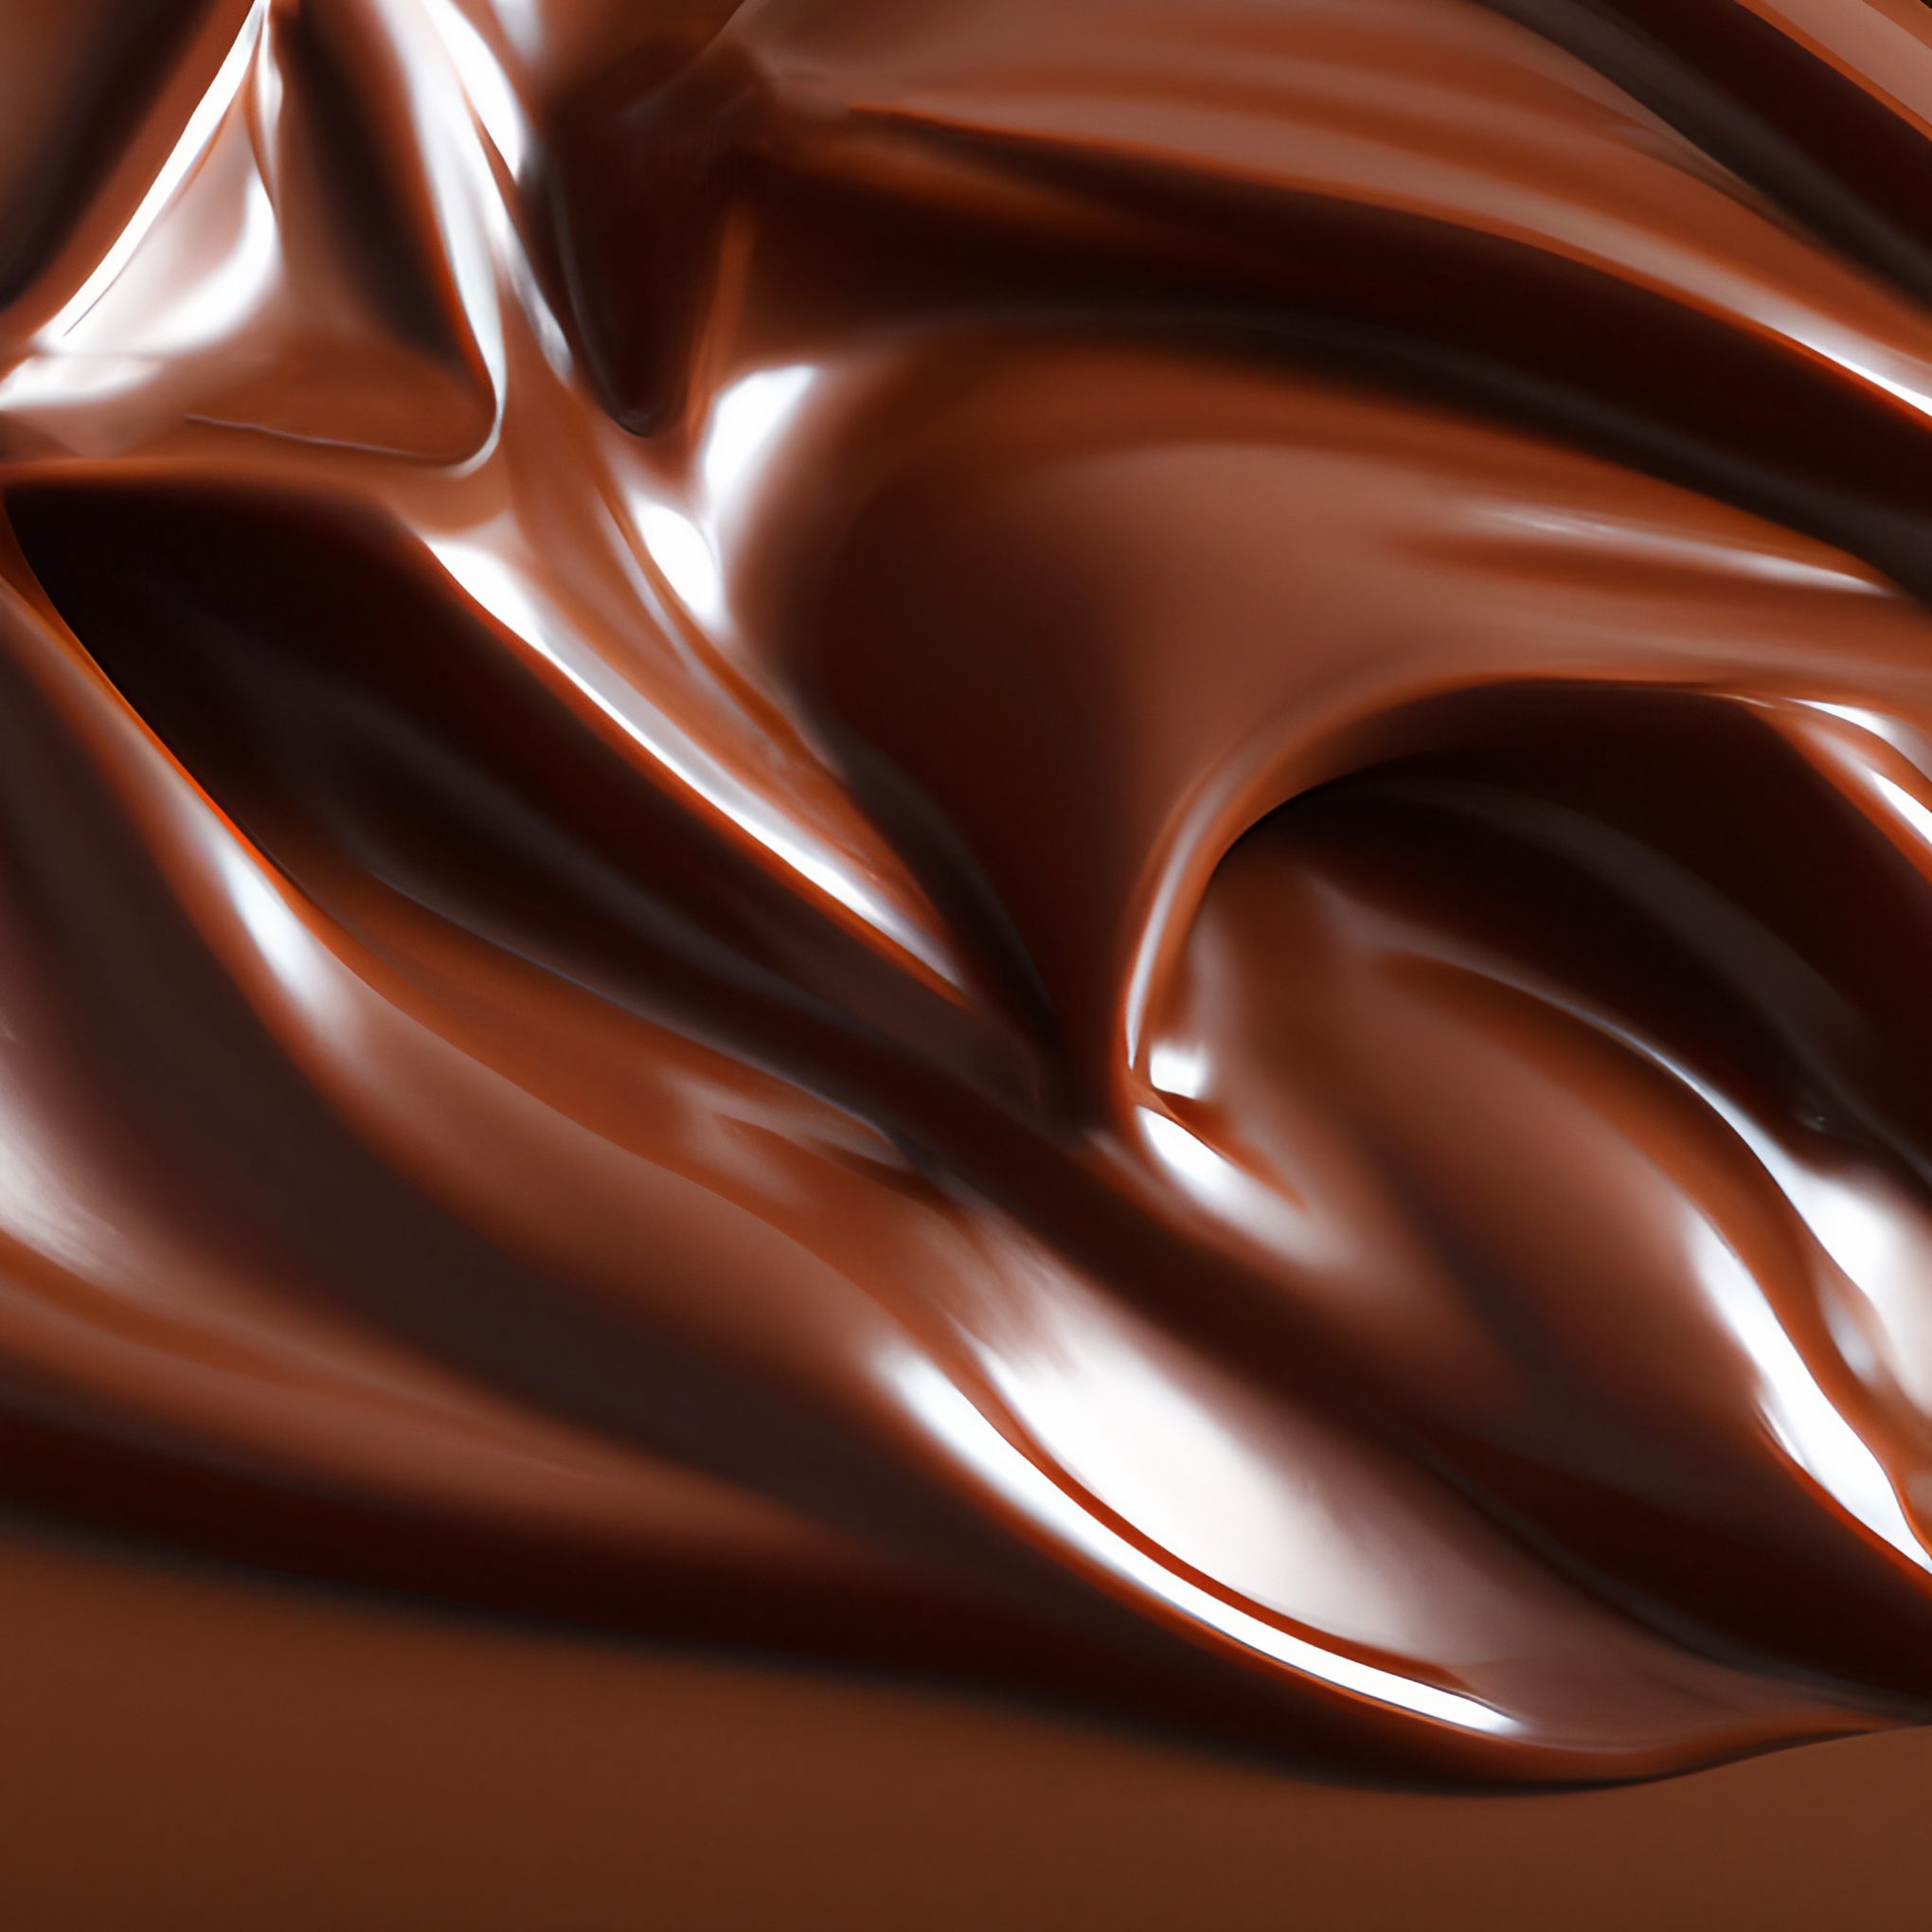 Liquid Chocolate Texture Free Stock Photo